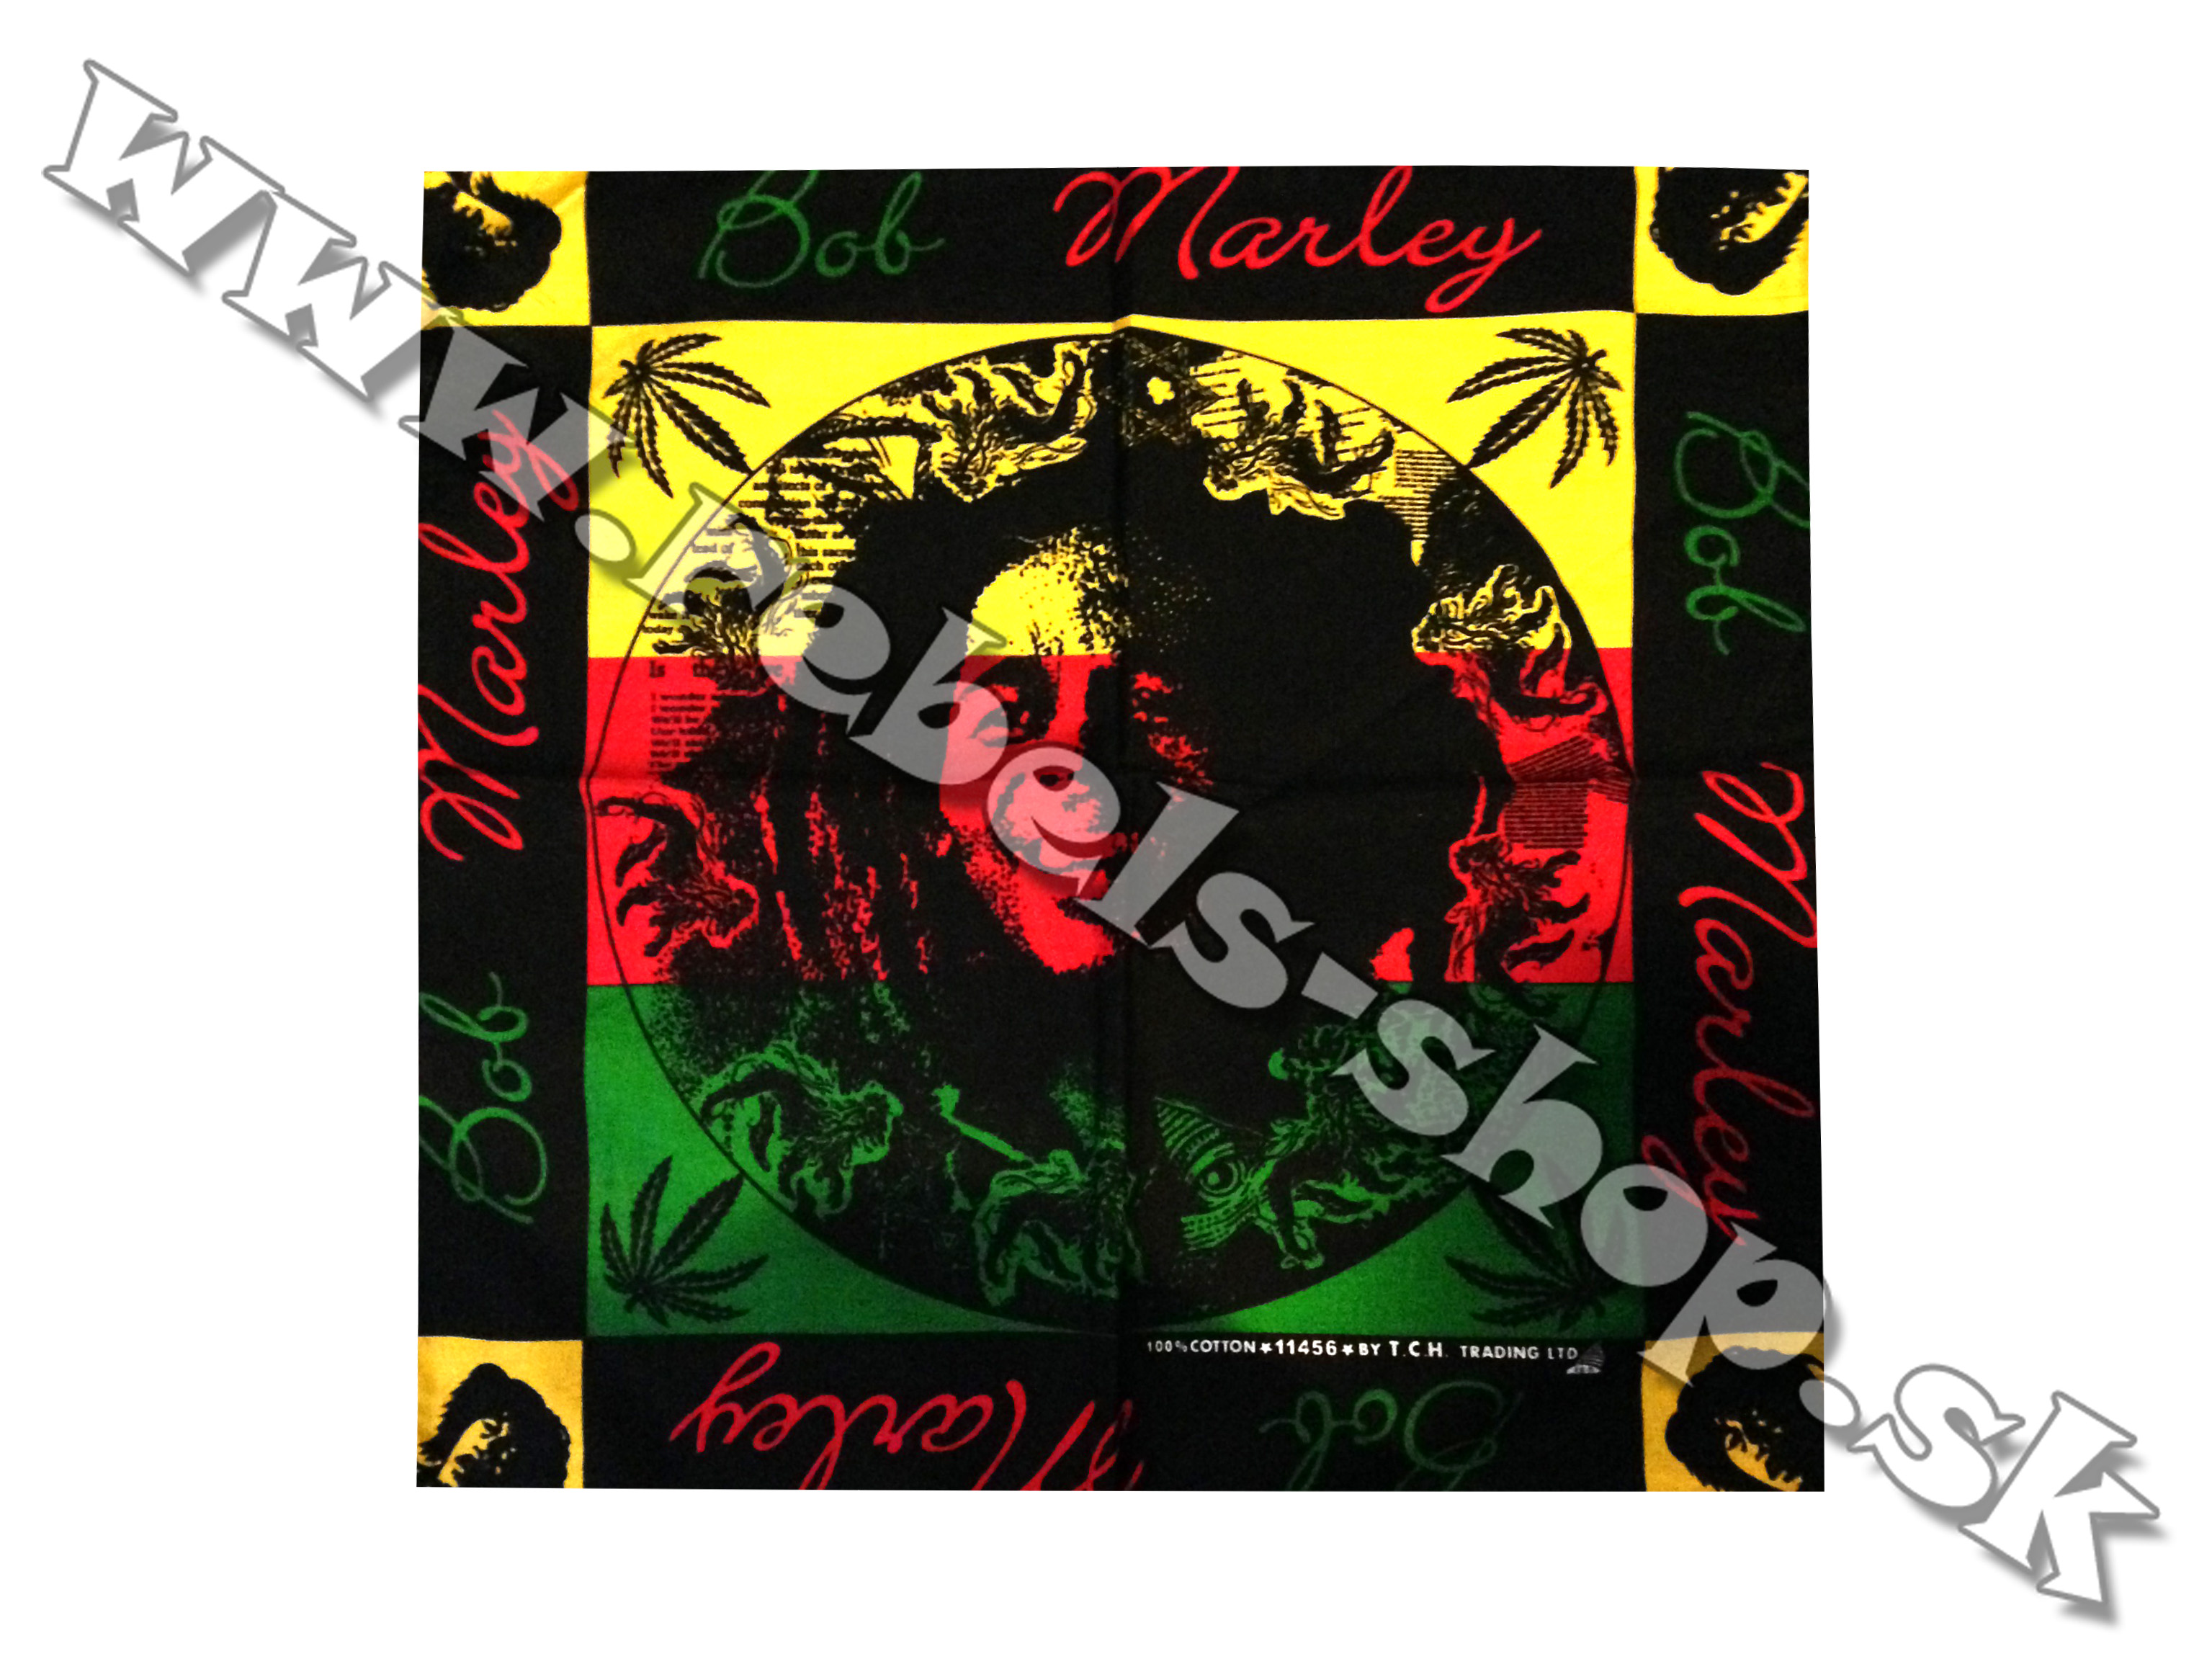 Šatka "Bob Marley"